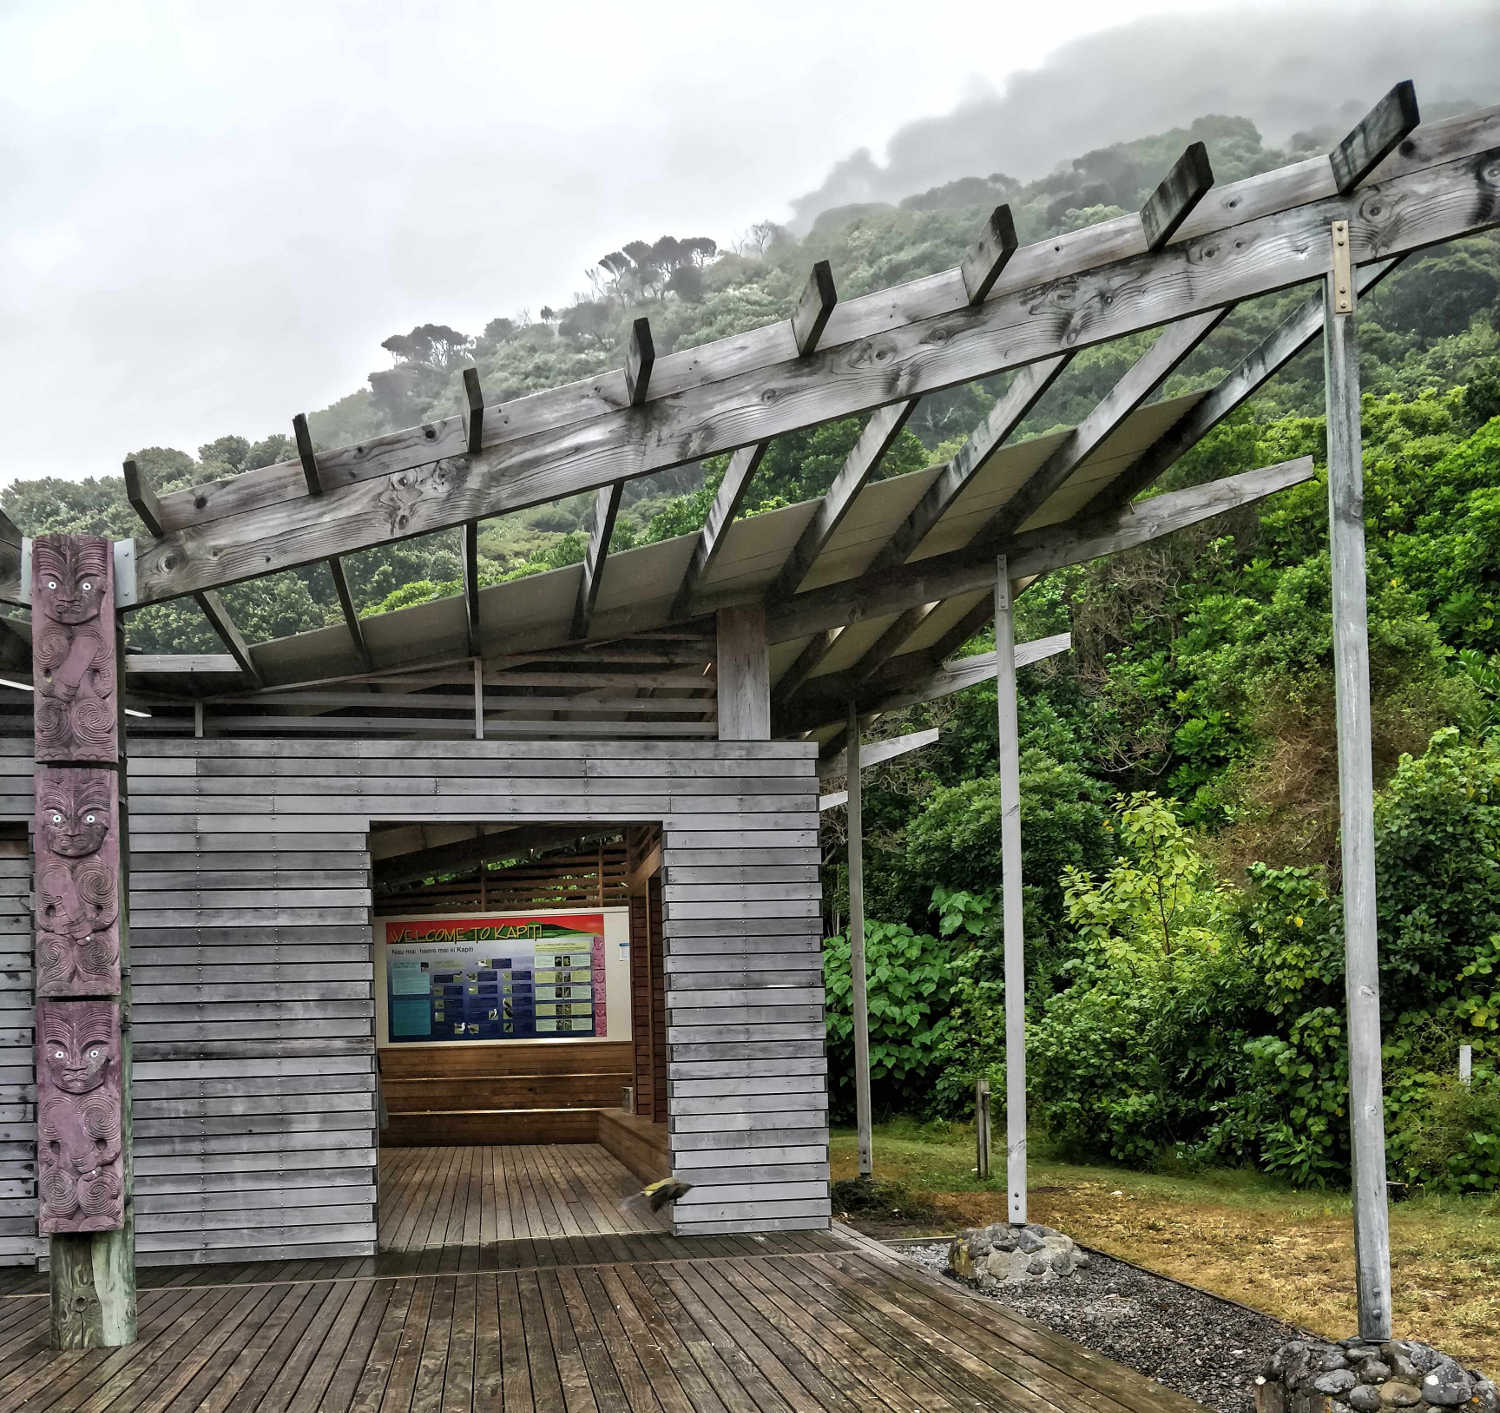 Misty day, Kapiti Island shelter _ self-guided info centre + cheeky kaka parrots hanging out inside, Wellington, New Zealand